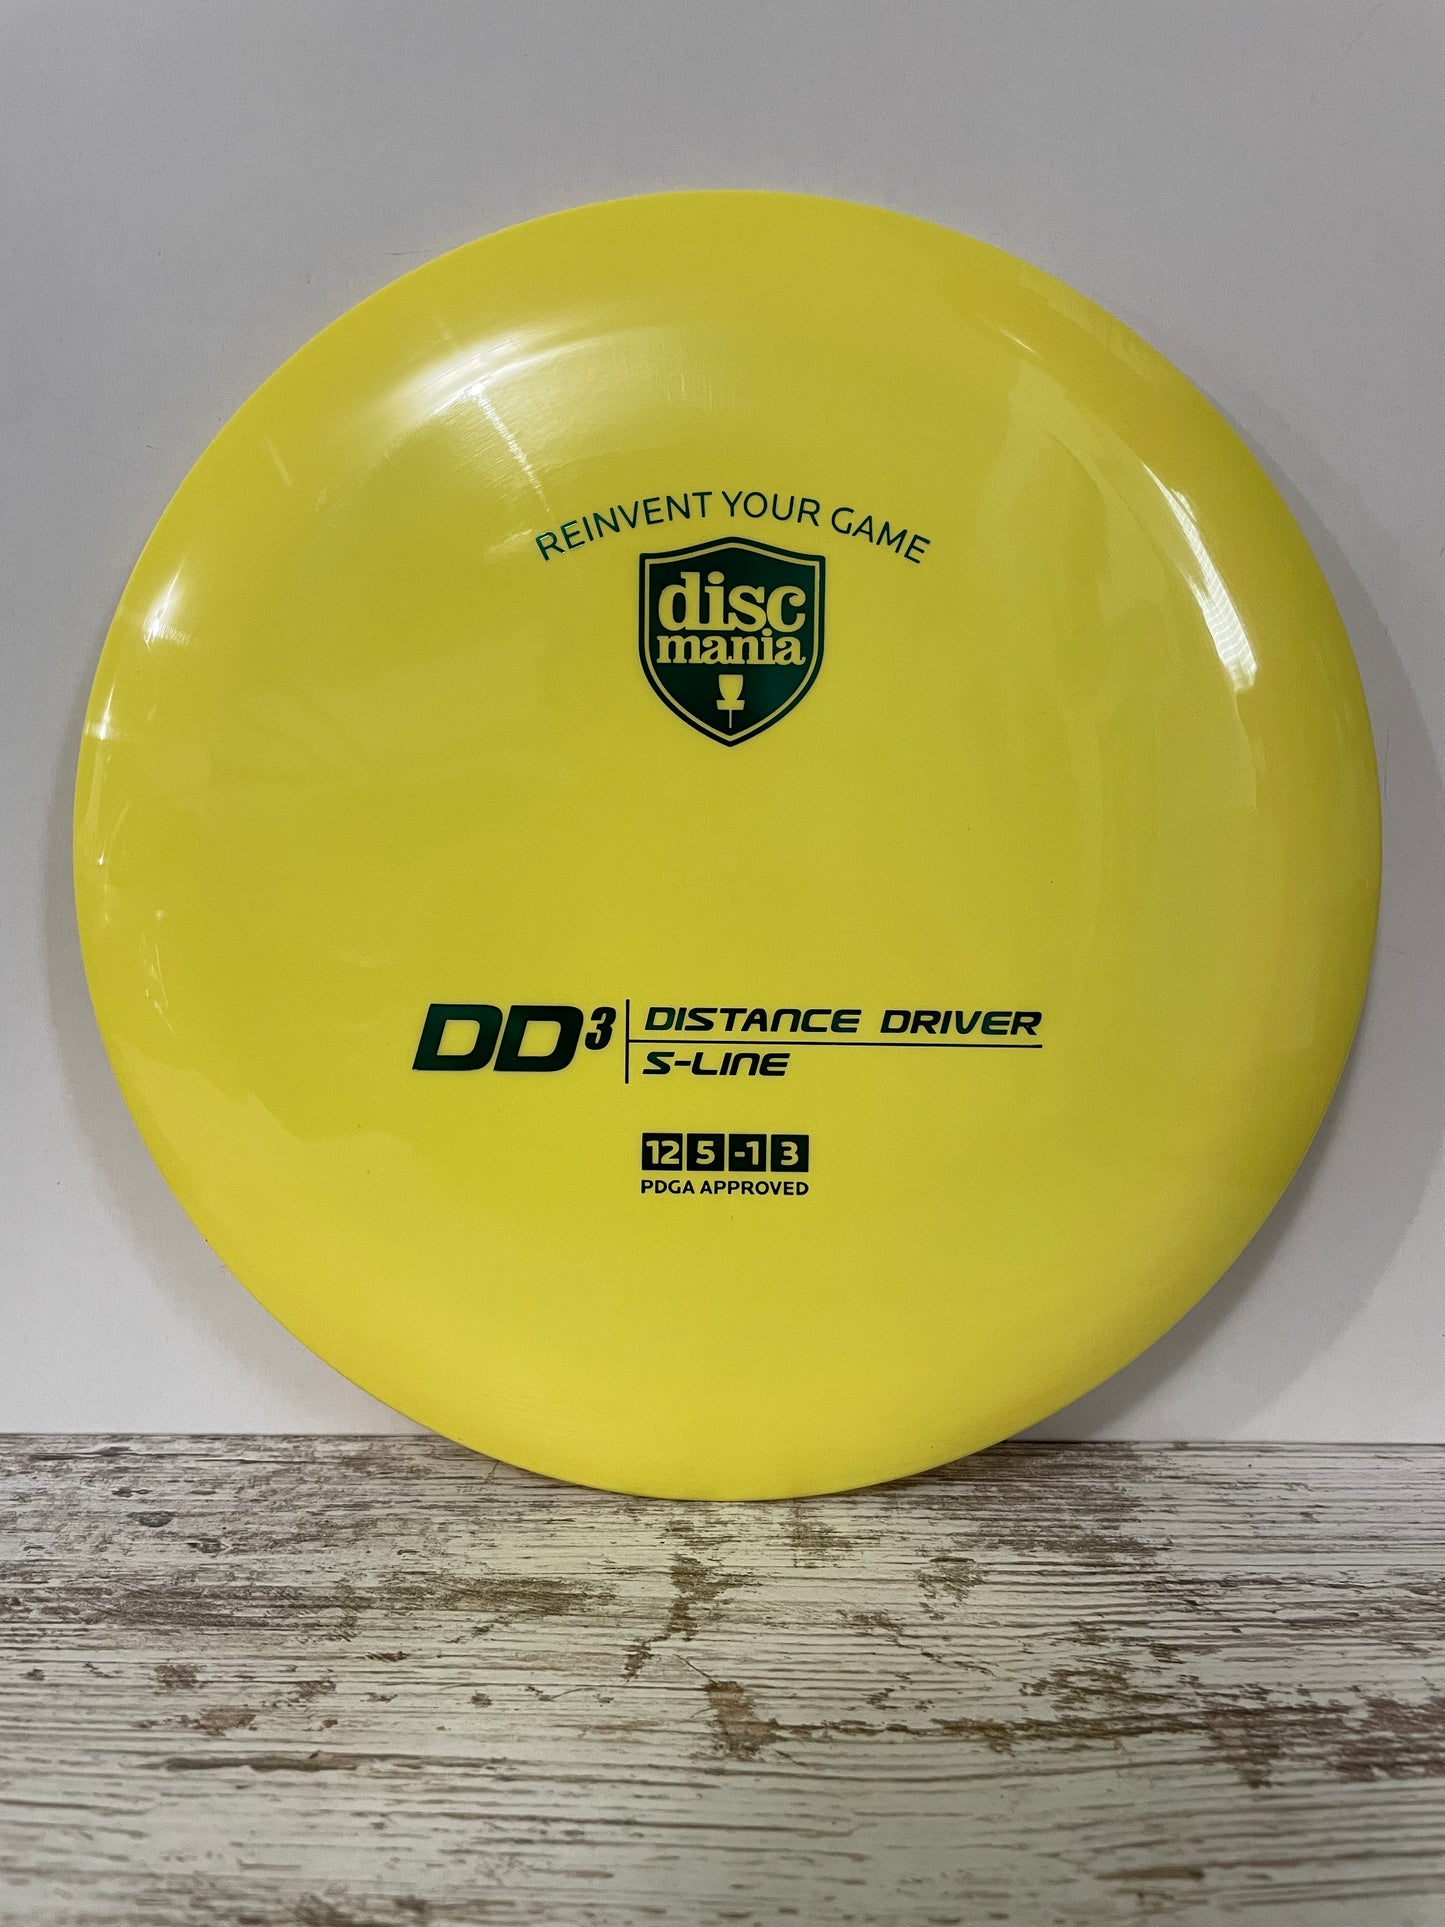 Discmania DD3 S-Line Distance Driver Yellow w/ Green Foil 173g